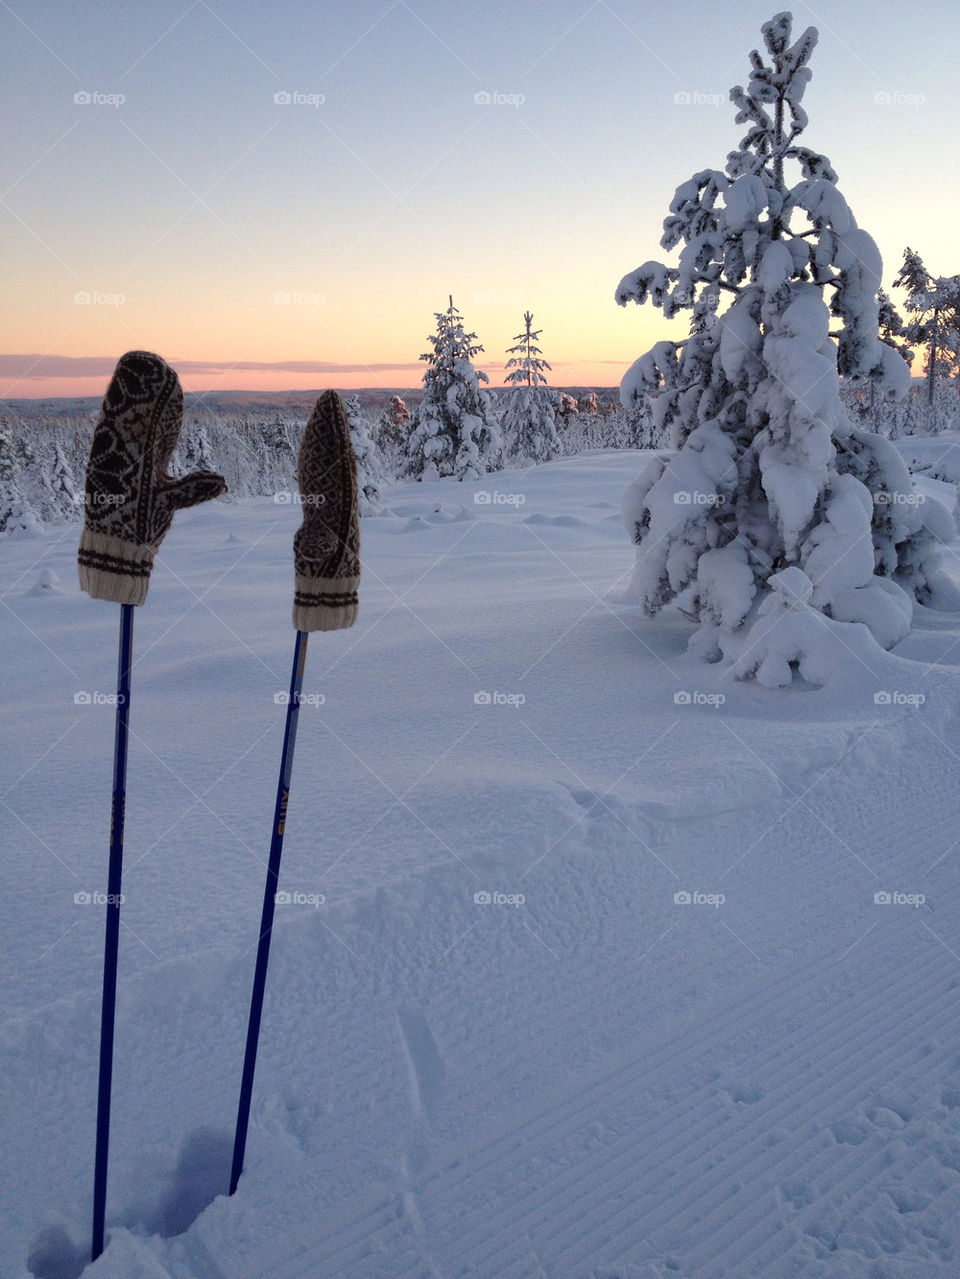 Skiing in Norway.